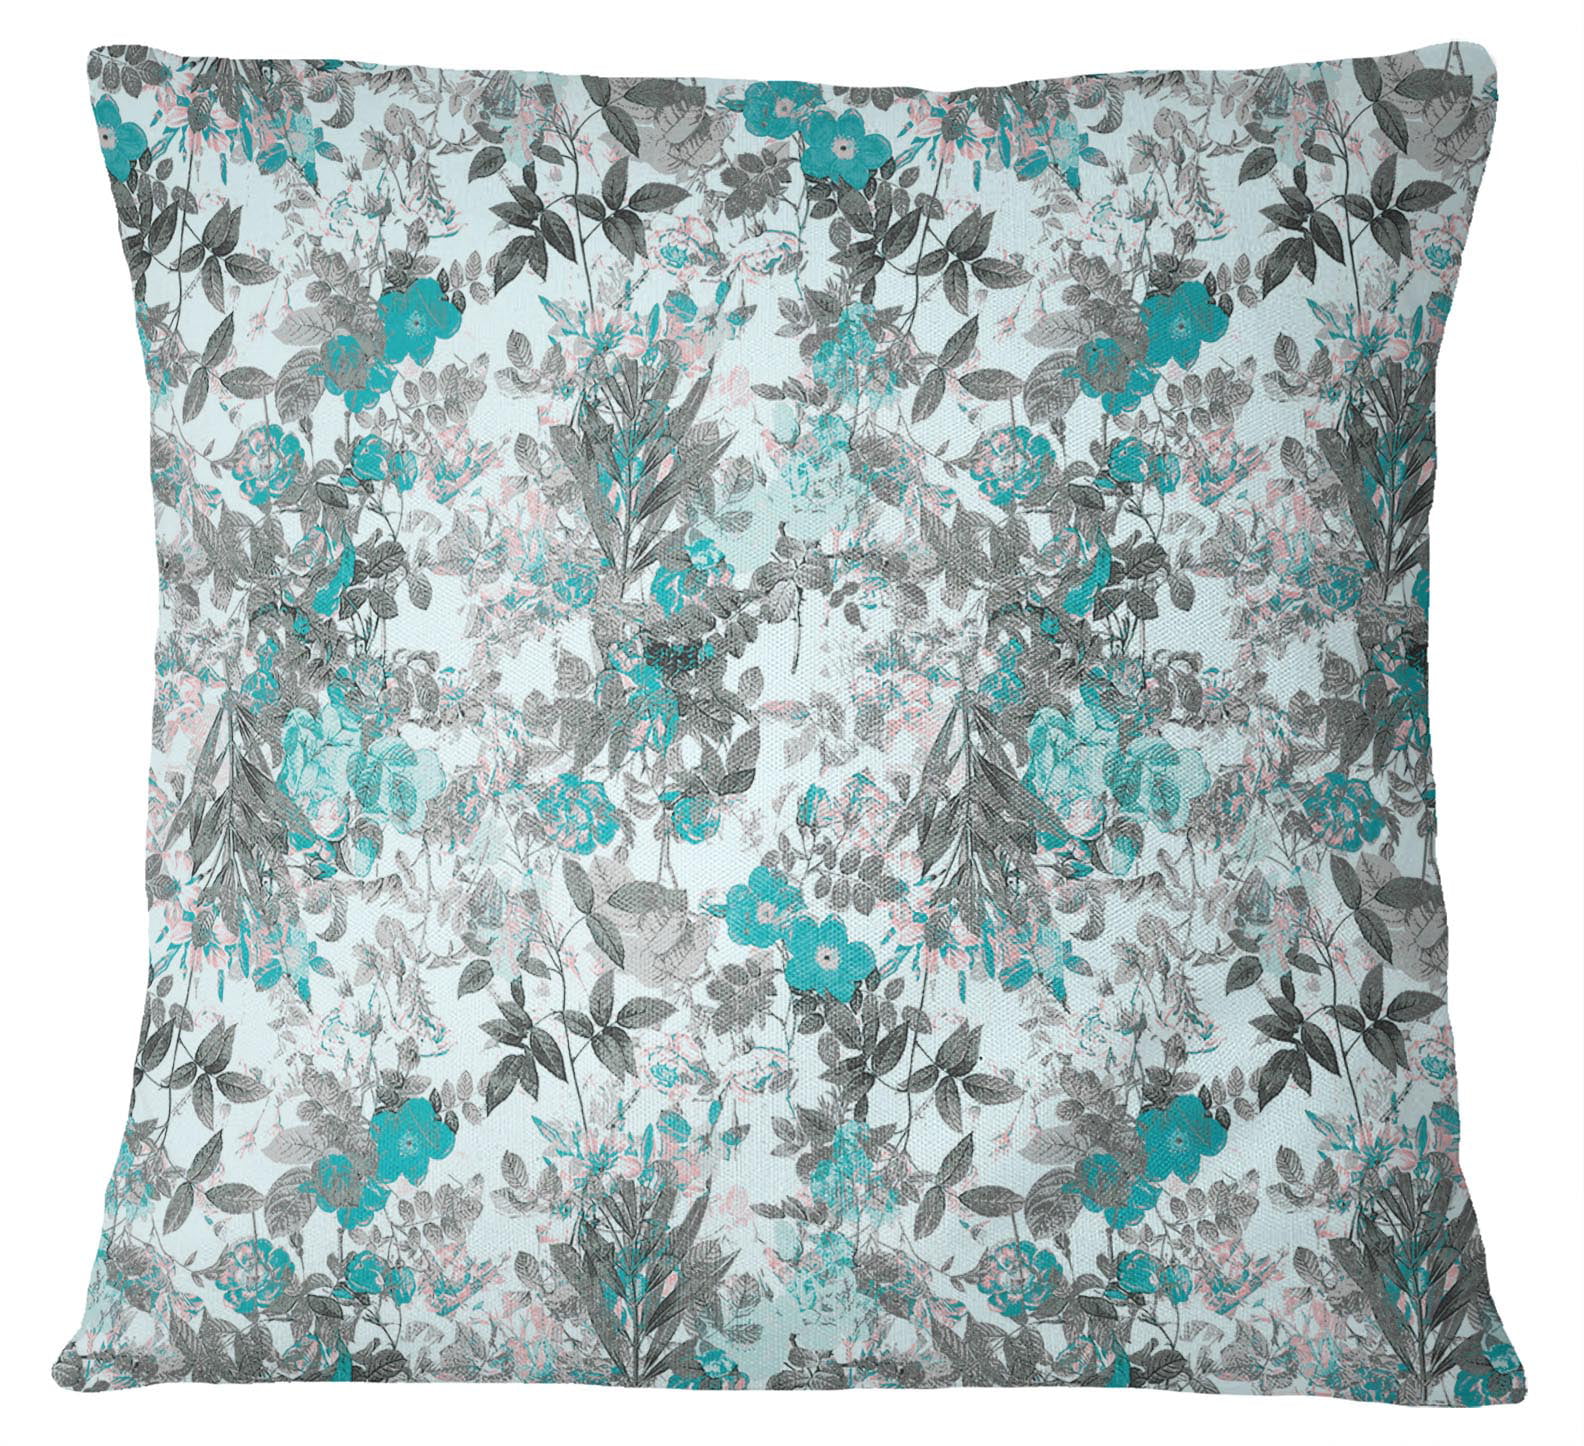 S4Sassy 2 Pcs Navy Floral Print Cushion Cover Cotton Poplin Square Pillow Case 